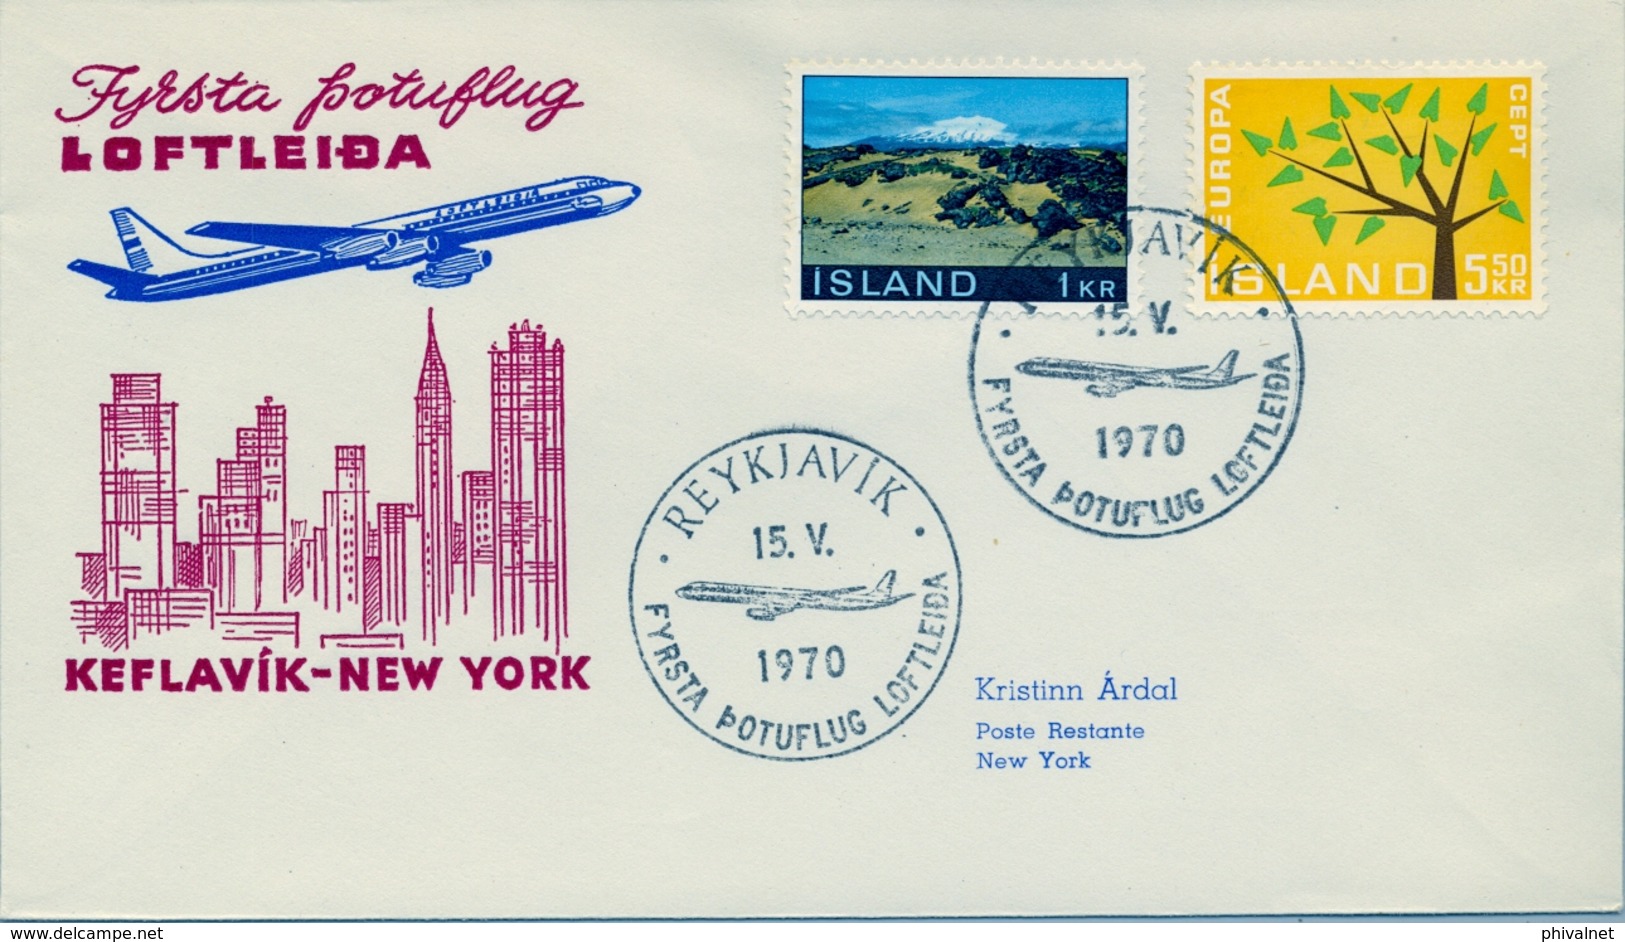 1970 , ISLANDIA , PRIMER VUELO LOFTLEIDA , REYKJAVIK - NEW YORK , KEFLAVIK AIRPORT - Briefe U. Dokumente